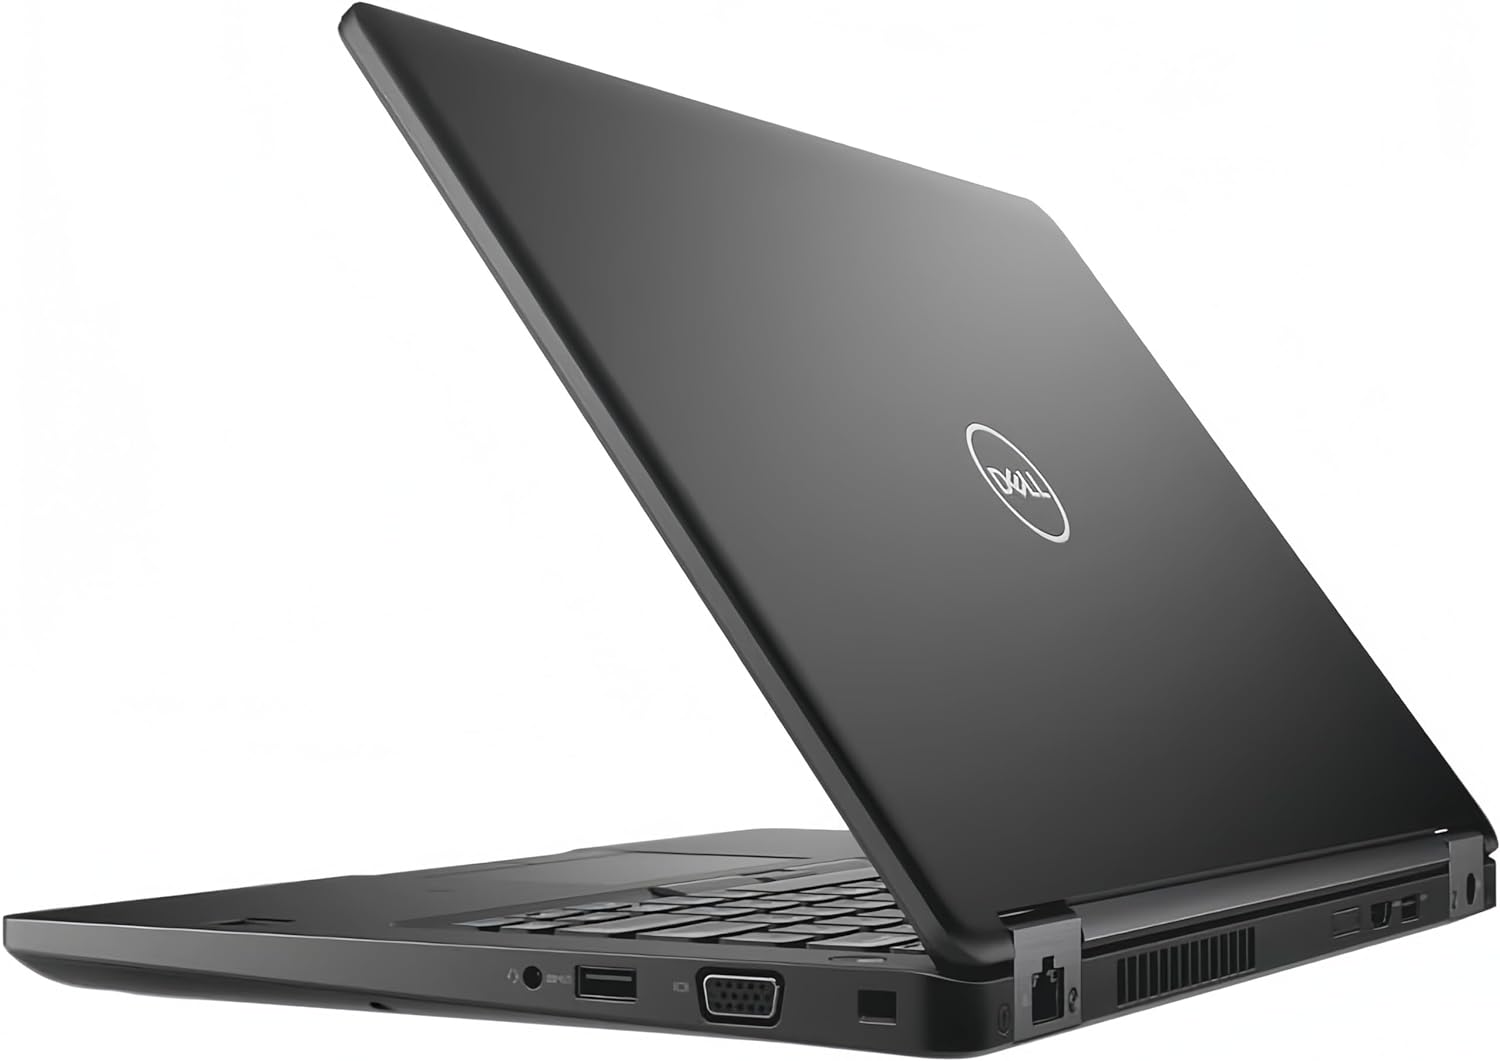 Dell Latitude 5491 Laptop 14 - Intel Core i5 8th Gen - i5-8300H - Quad Core 4Ghz - 256 GB SSD - 8GB RAM - 1920x1080 FHD - Windows 10 Pro (Renewed)